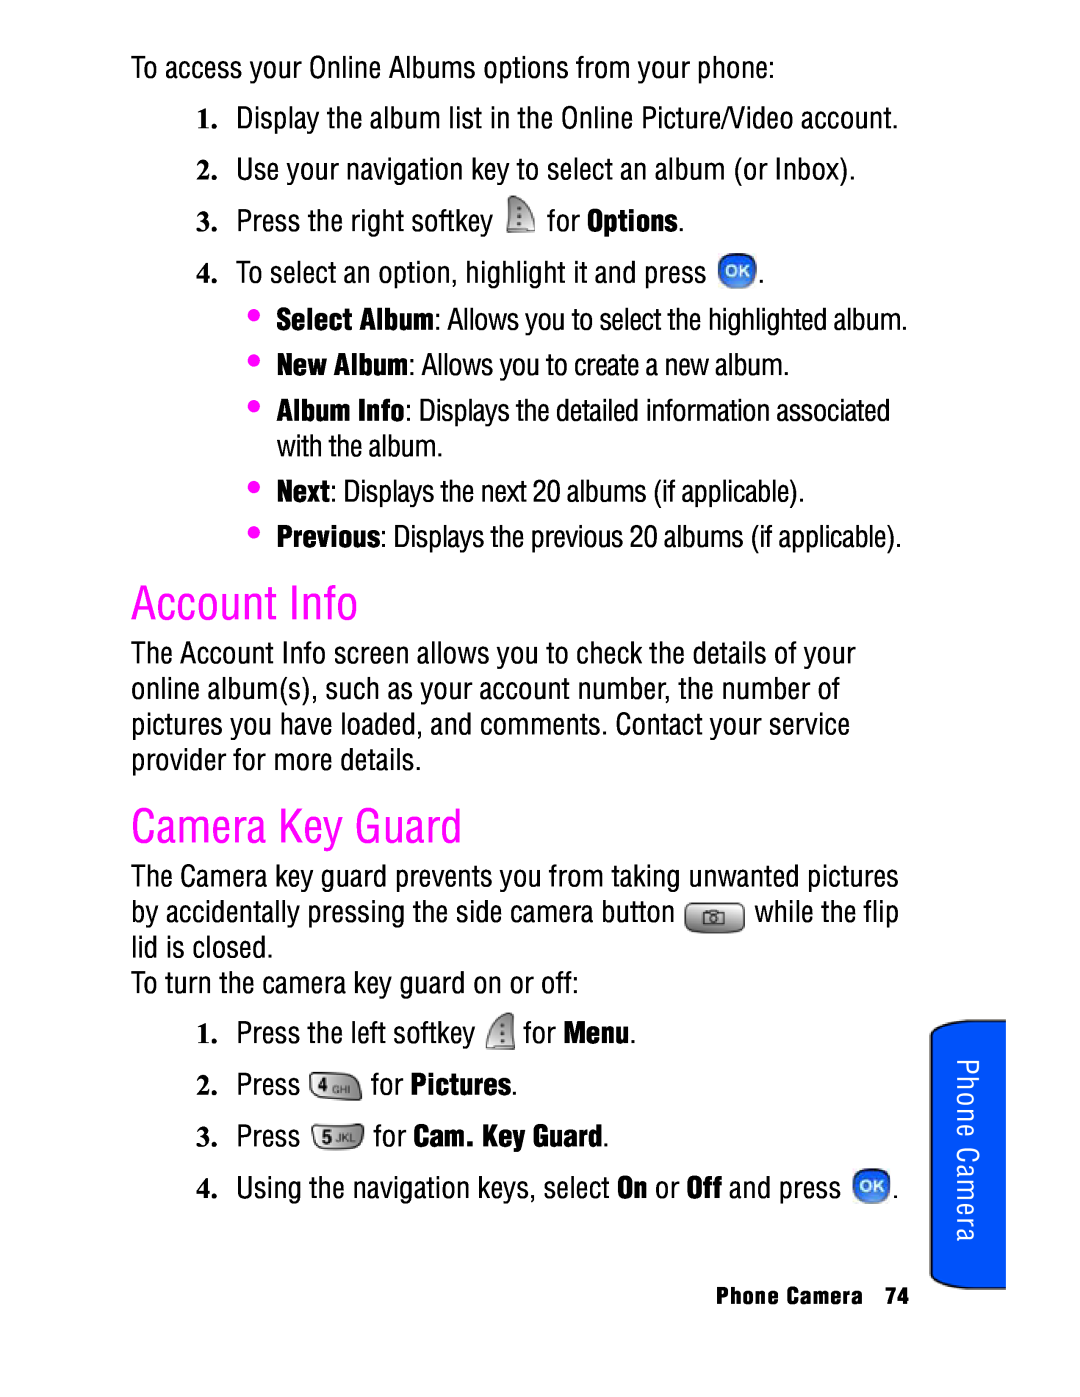 Samsung SPH-a740 manual Account Info, Camera Key Guard, Press for Cam. Key Guard, Phone Camera 